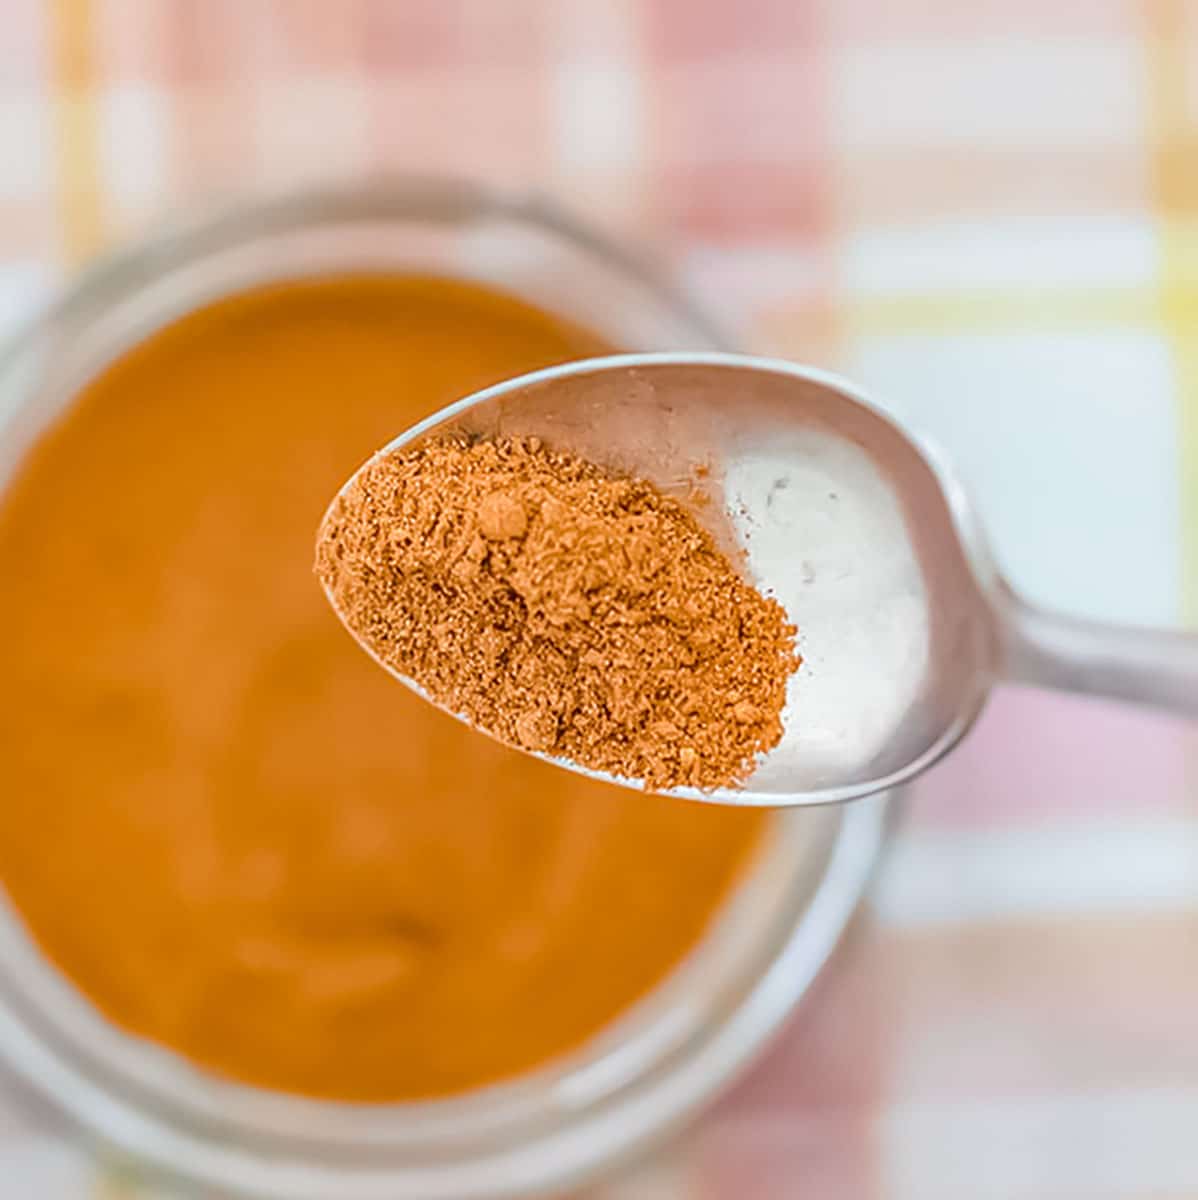 How to make pumpkin spice blend